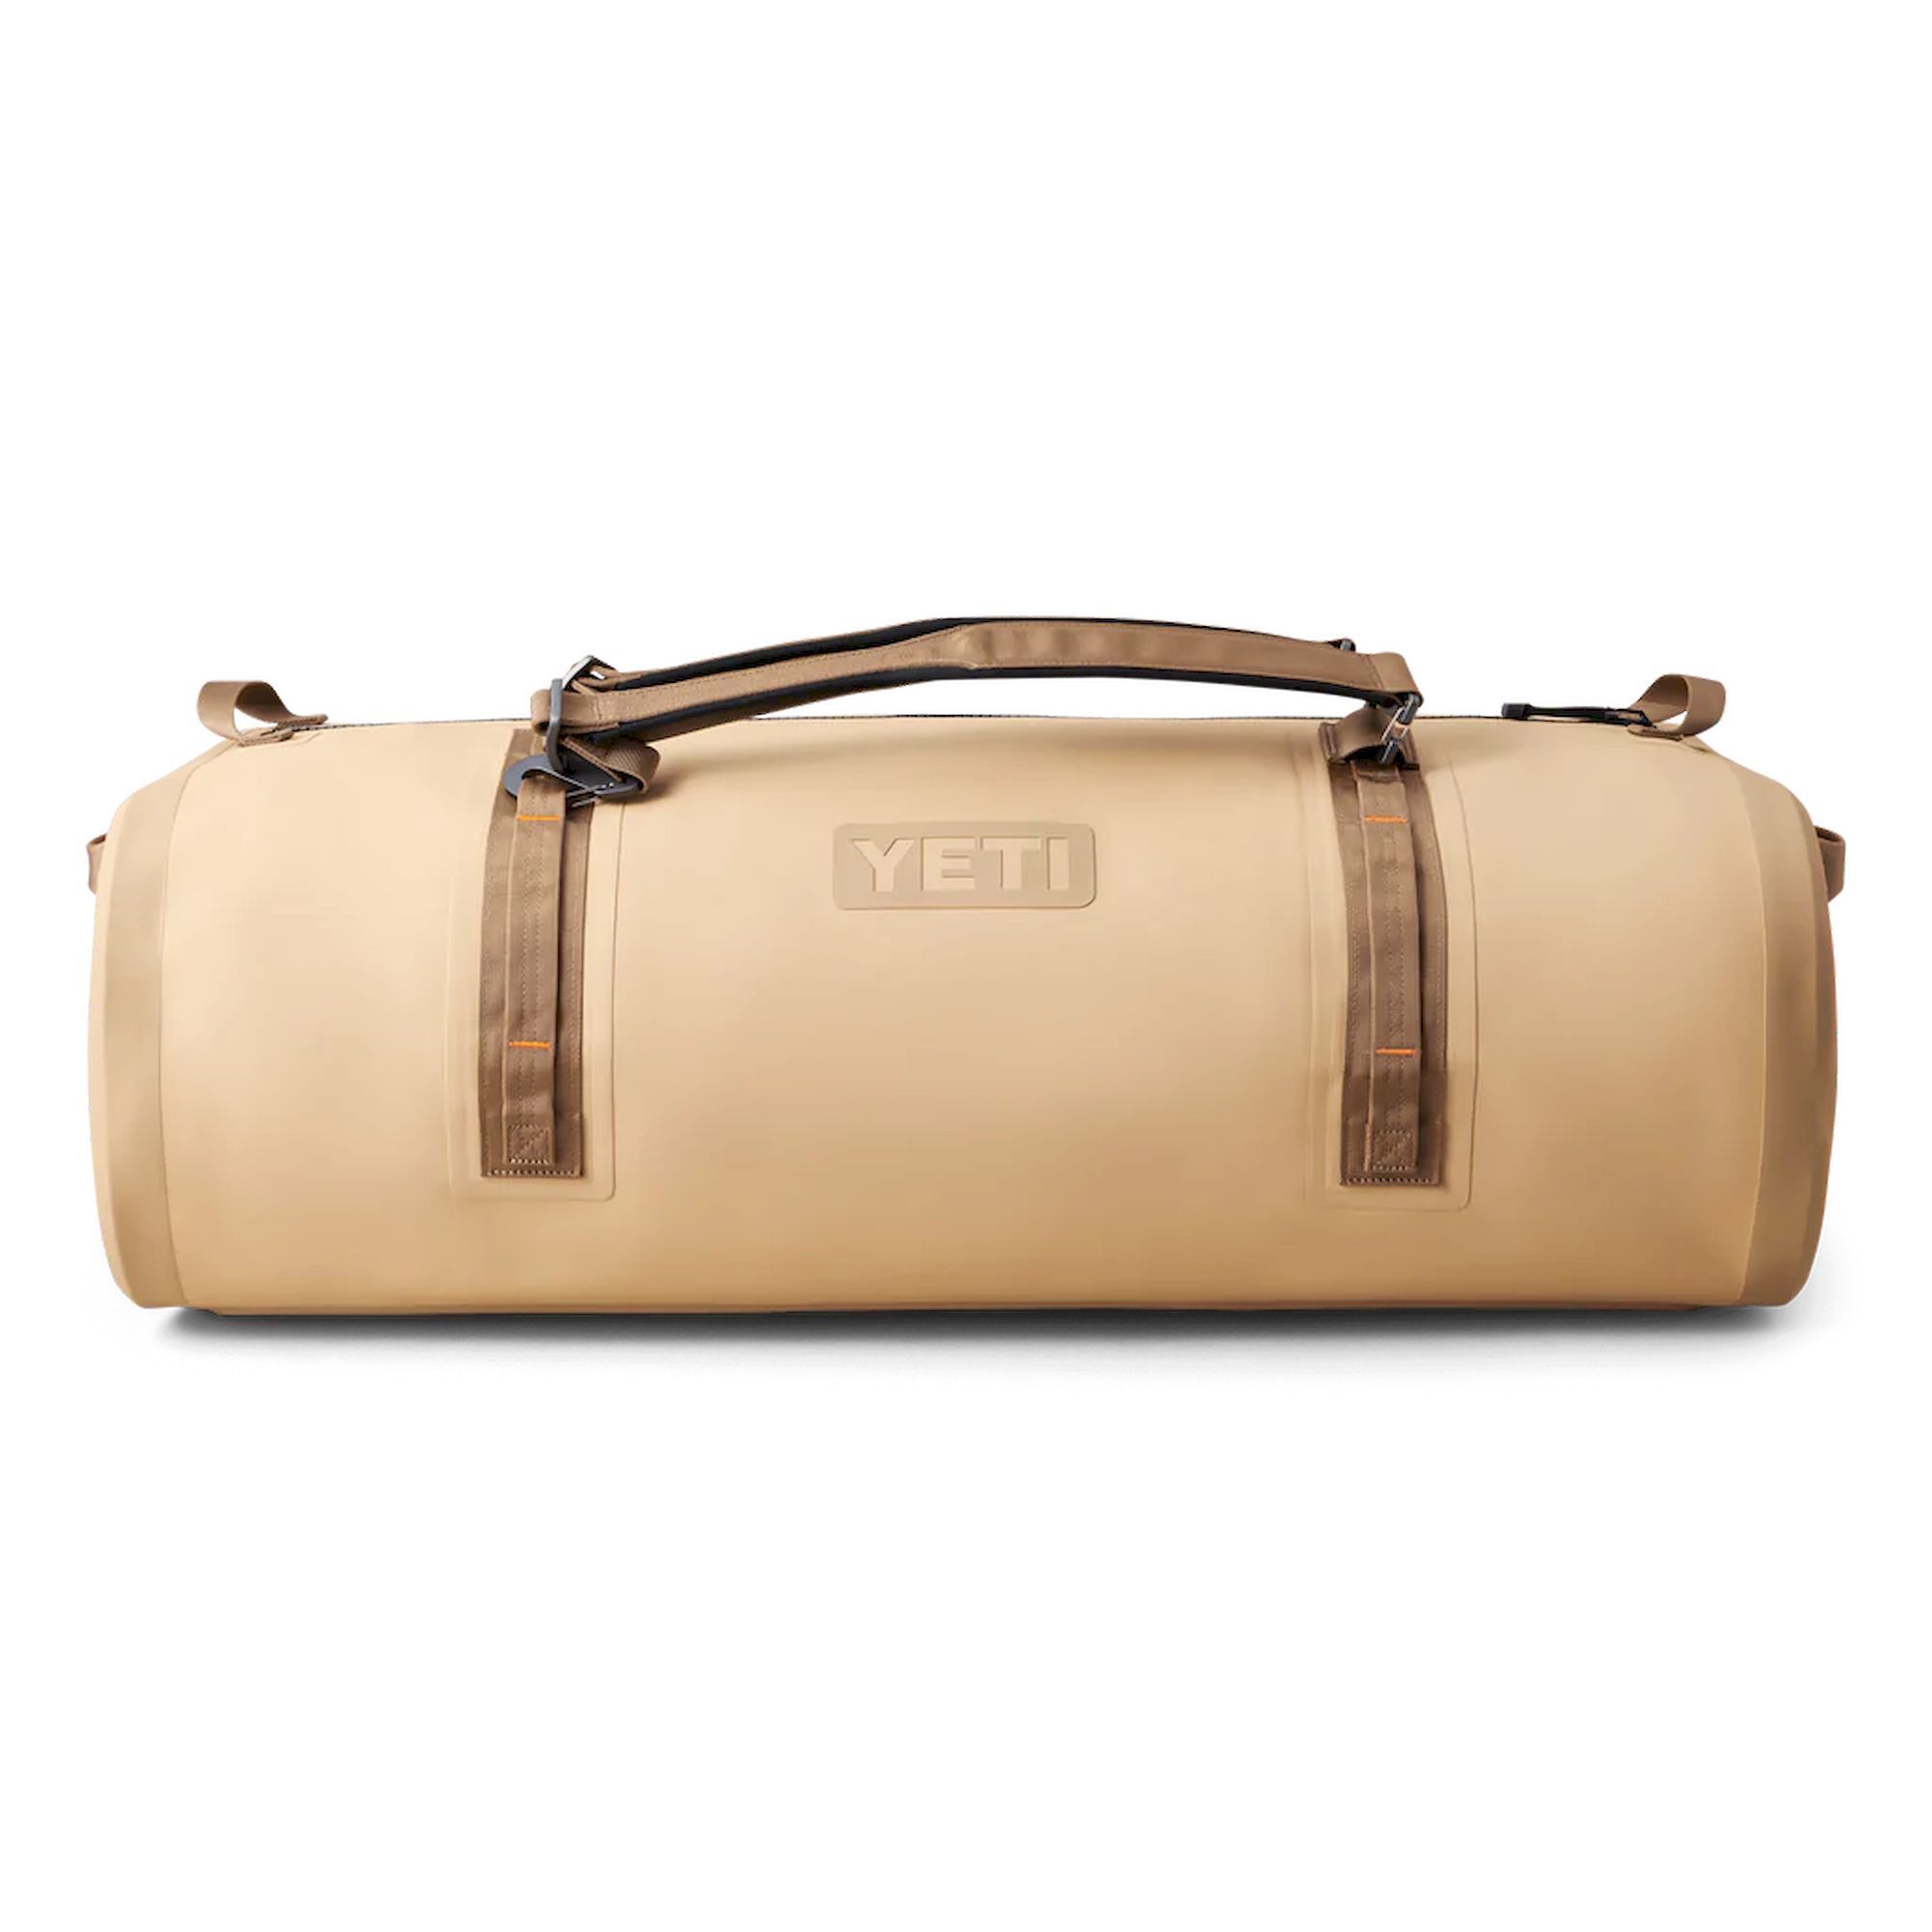 Yeti Panga 100 Duffel - Travel bag